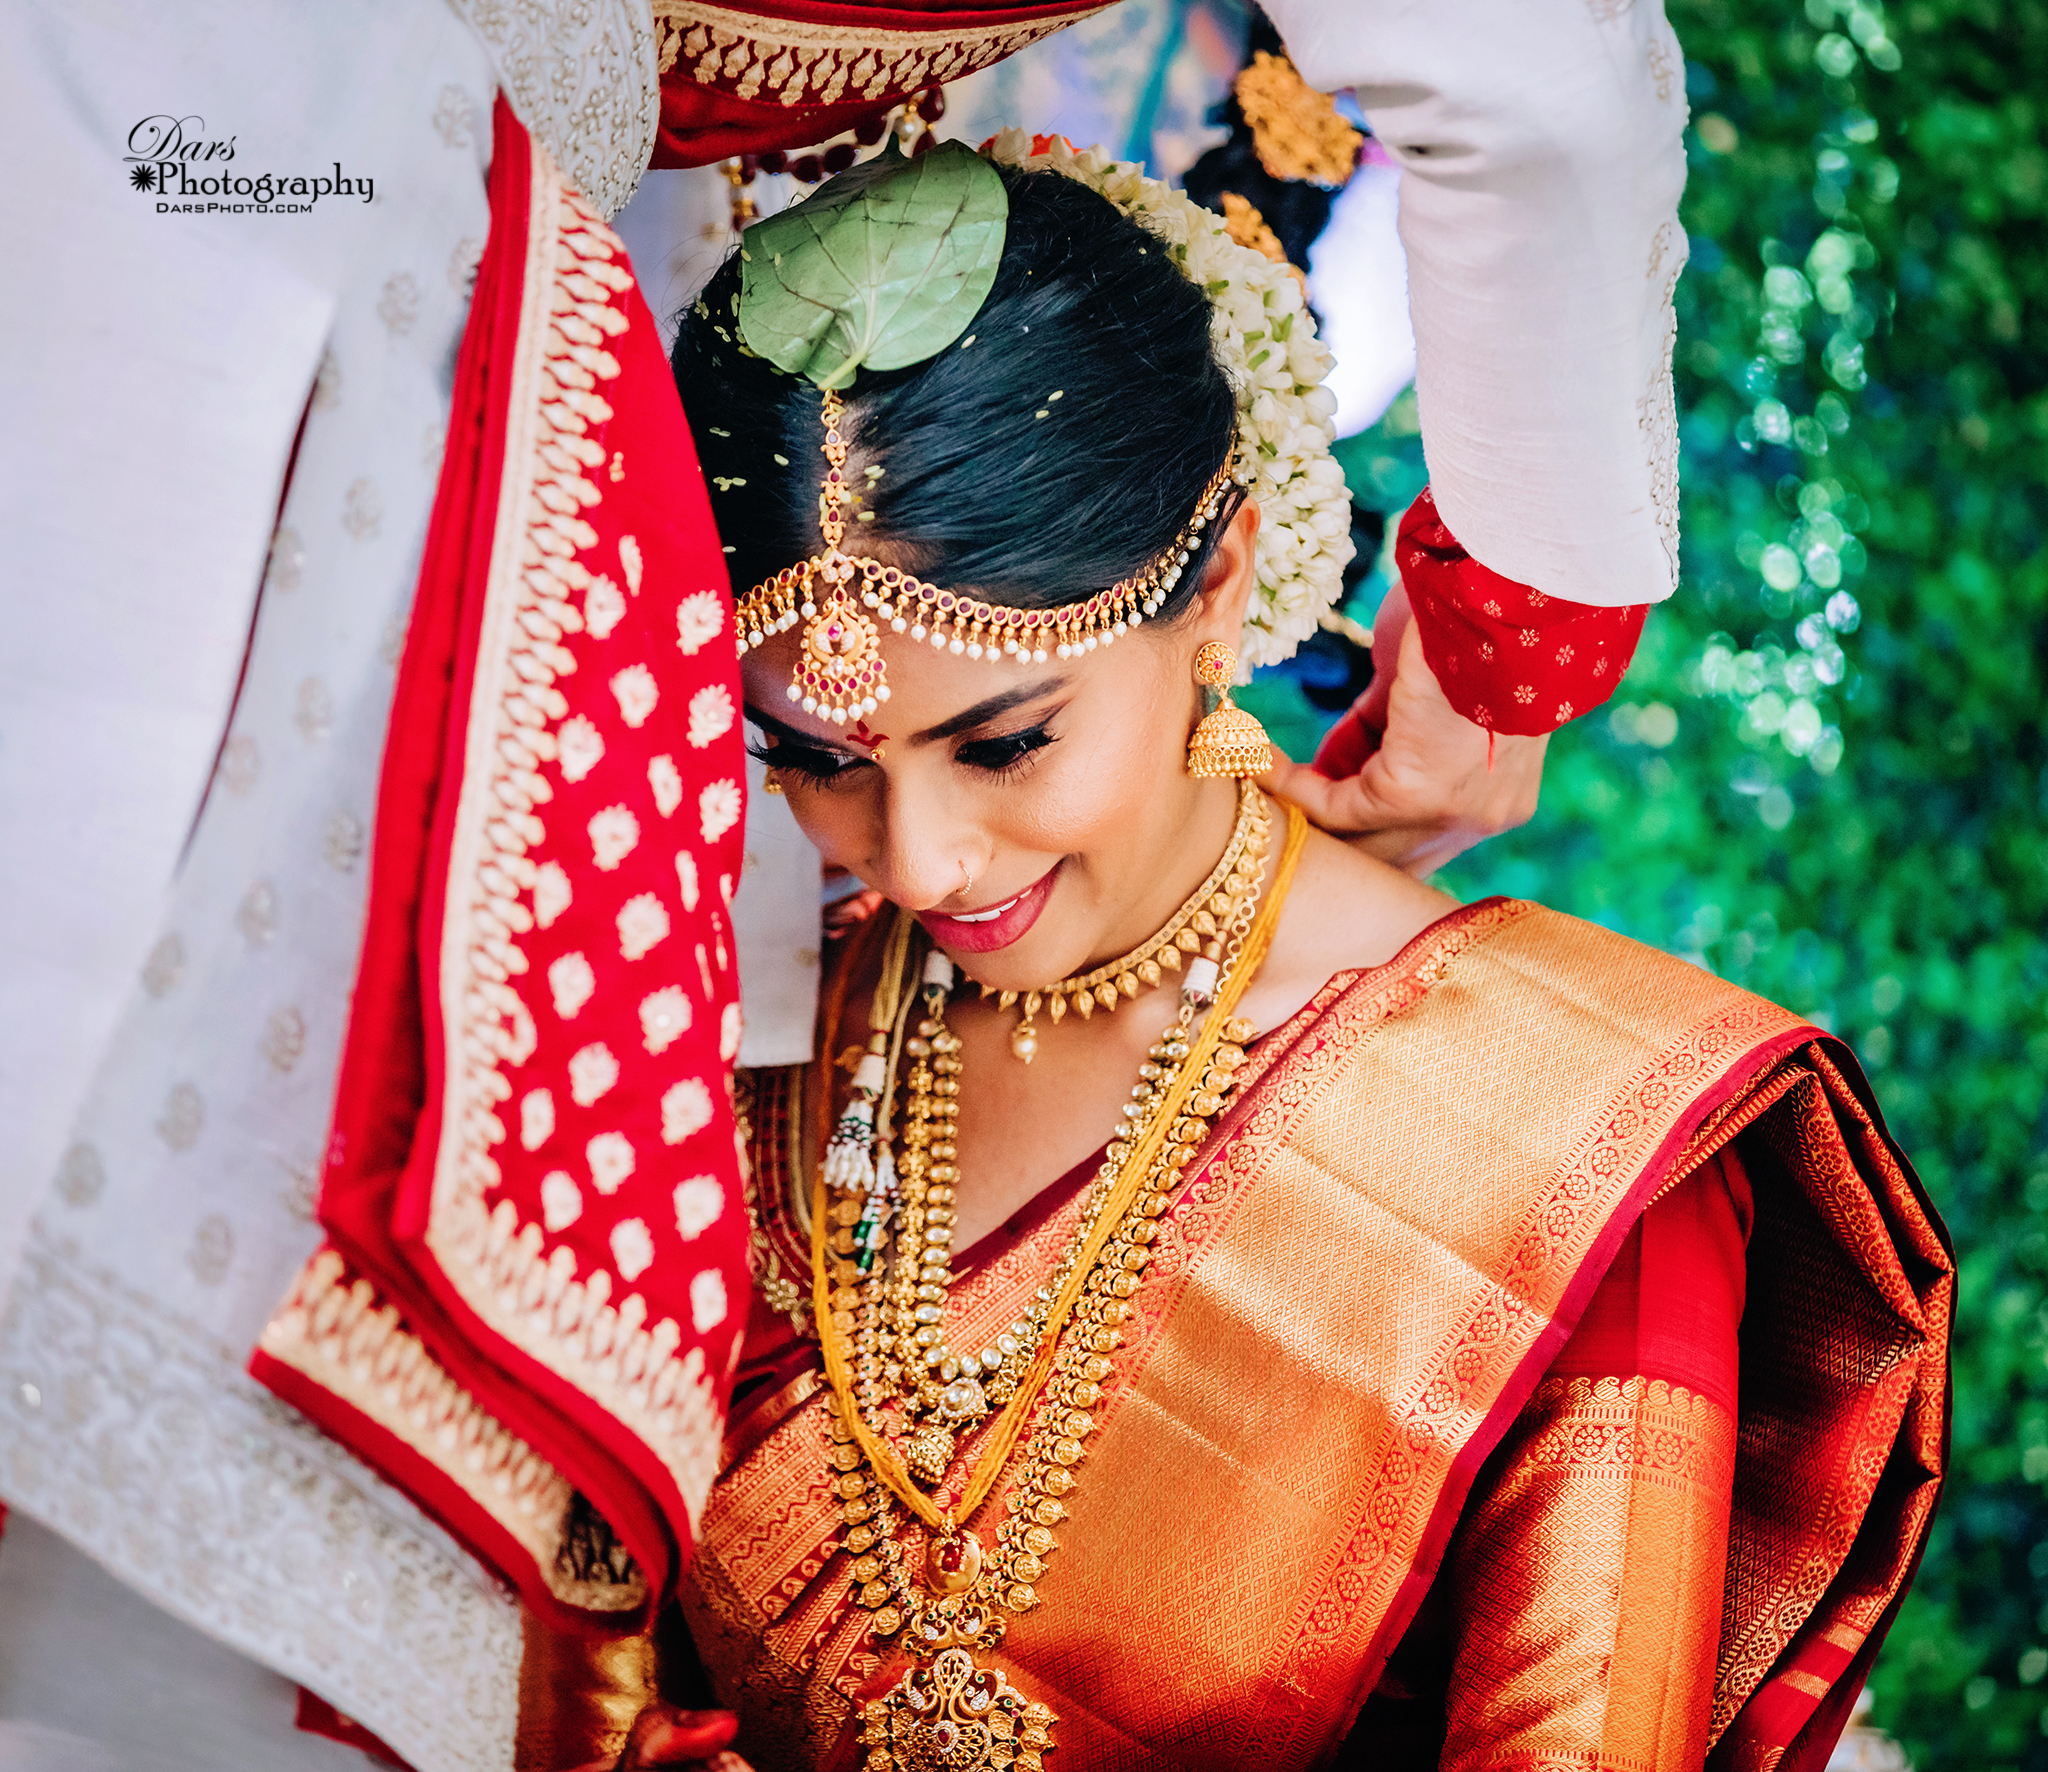 An Indian Wedding Spanning 5 Days! | Wedding photoshoot poses, Indian  wedding poses, Indian wedding couple photography